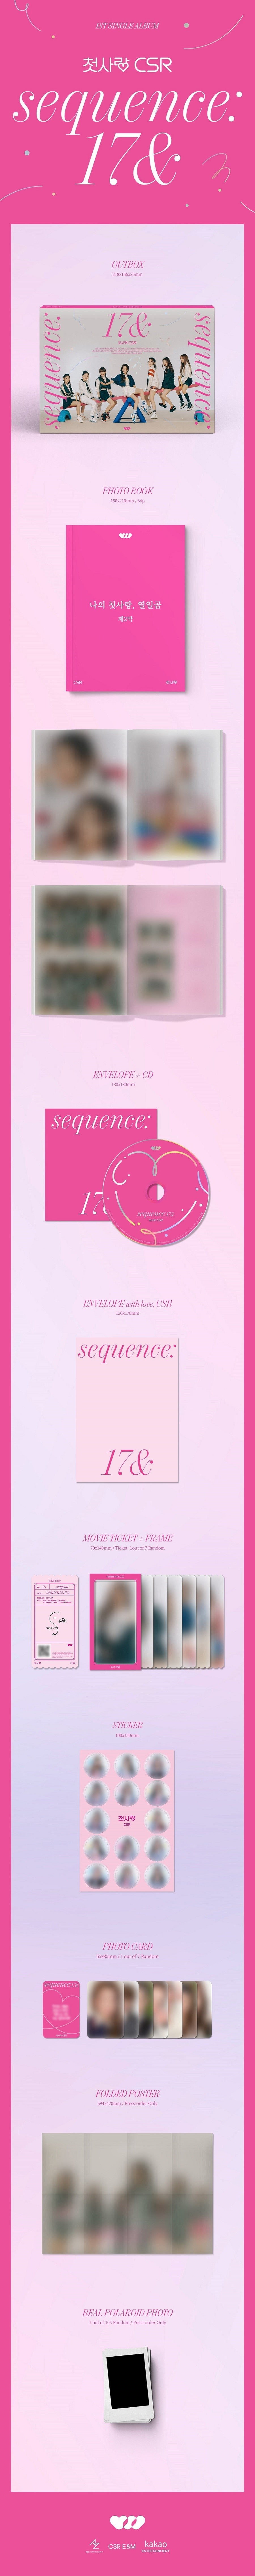 CSR Single Album Vol. 1 - Sequence : 17&